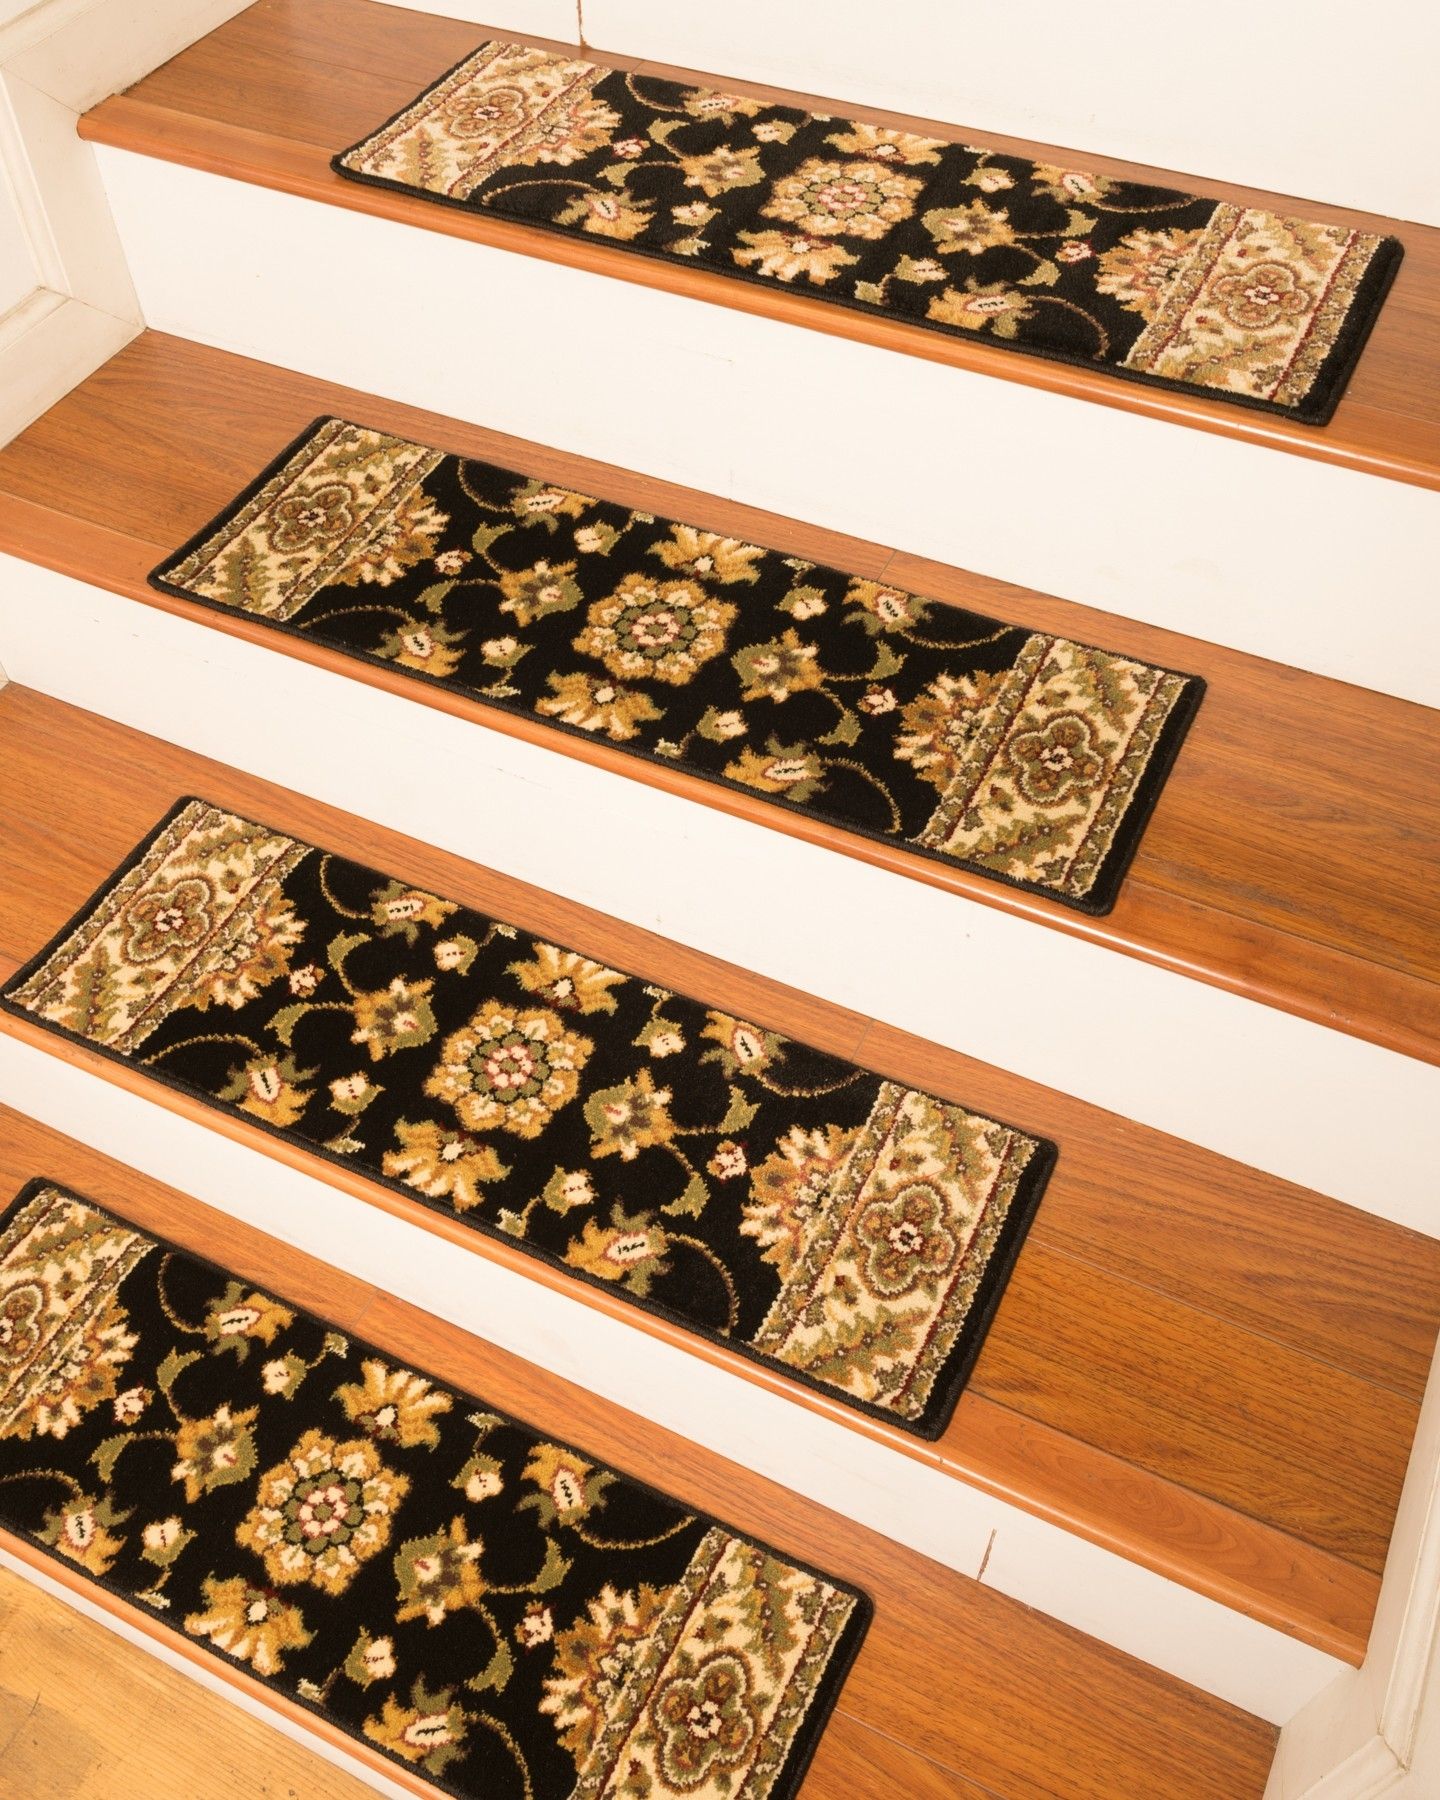 Sherwood Carpet Stair Treads Black Natural Home Rugs Natural Regarding Carpet Stair Treads And Rugs 9× (View 5 of 20)